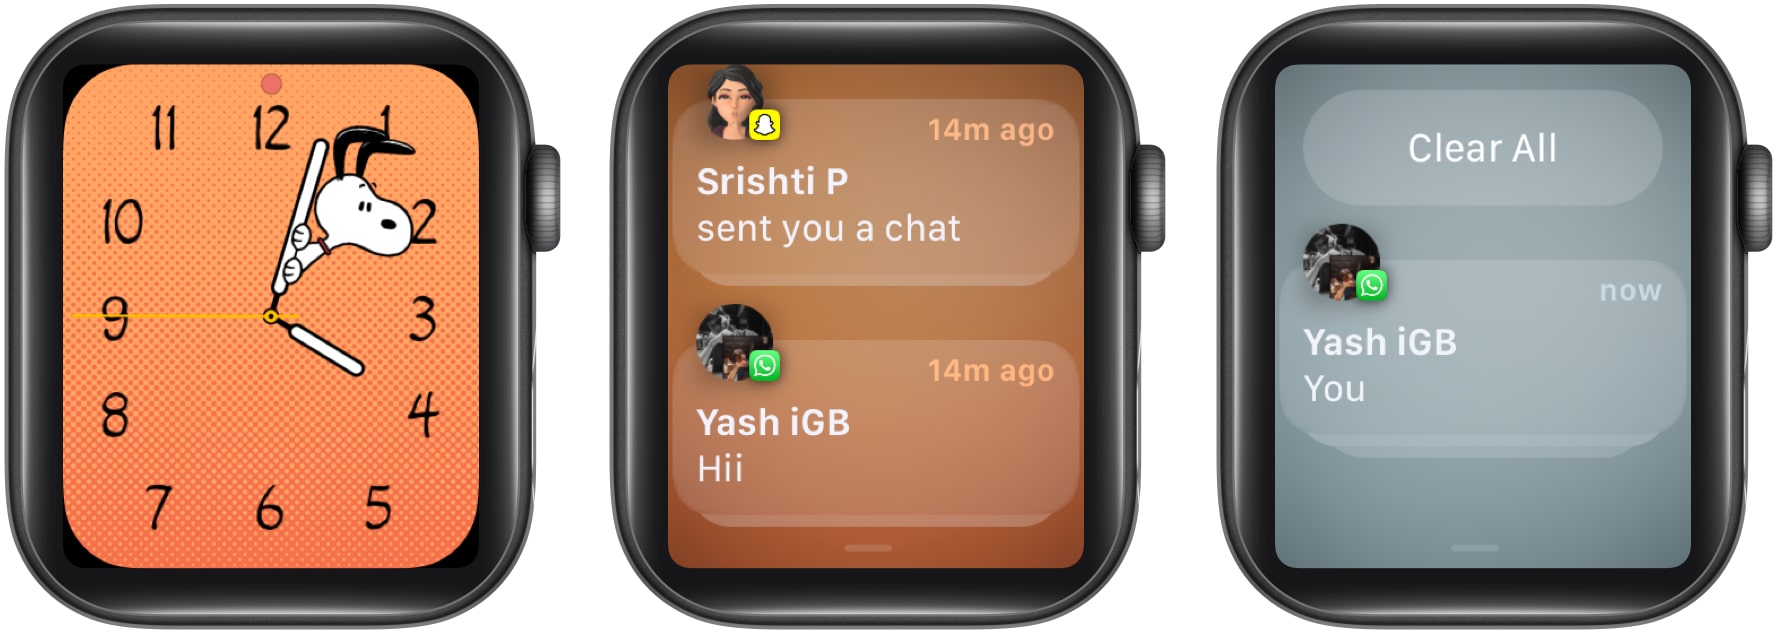 Clear all unread notifications on Apple Watch